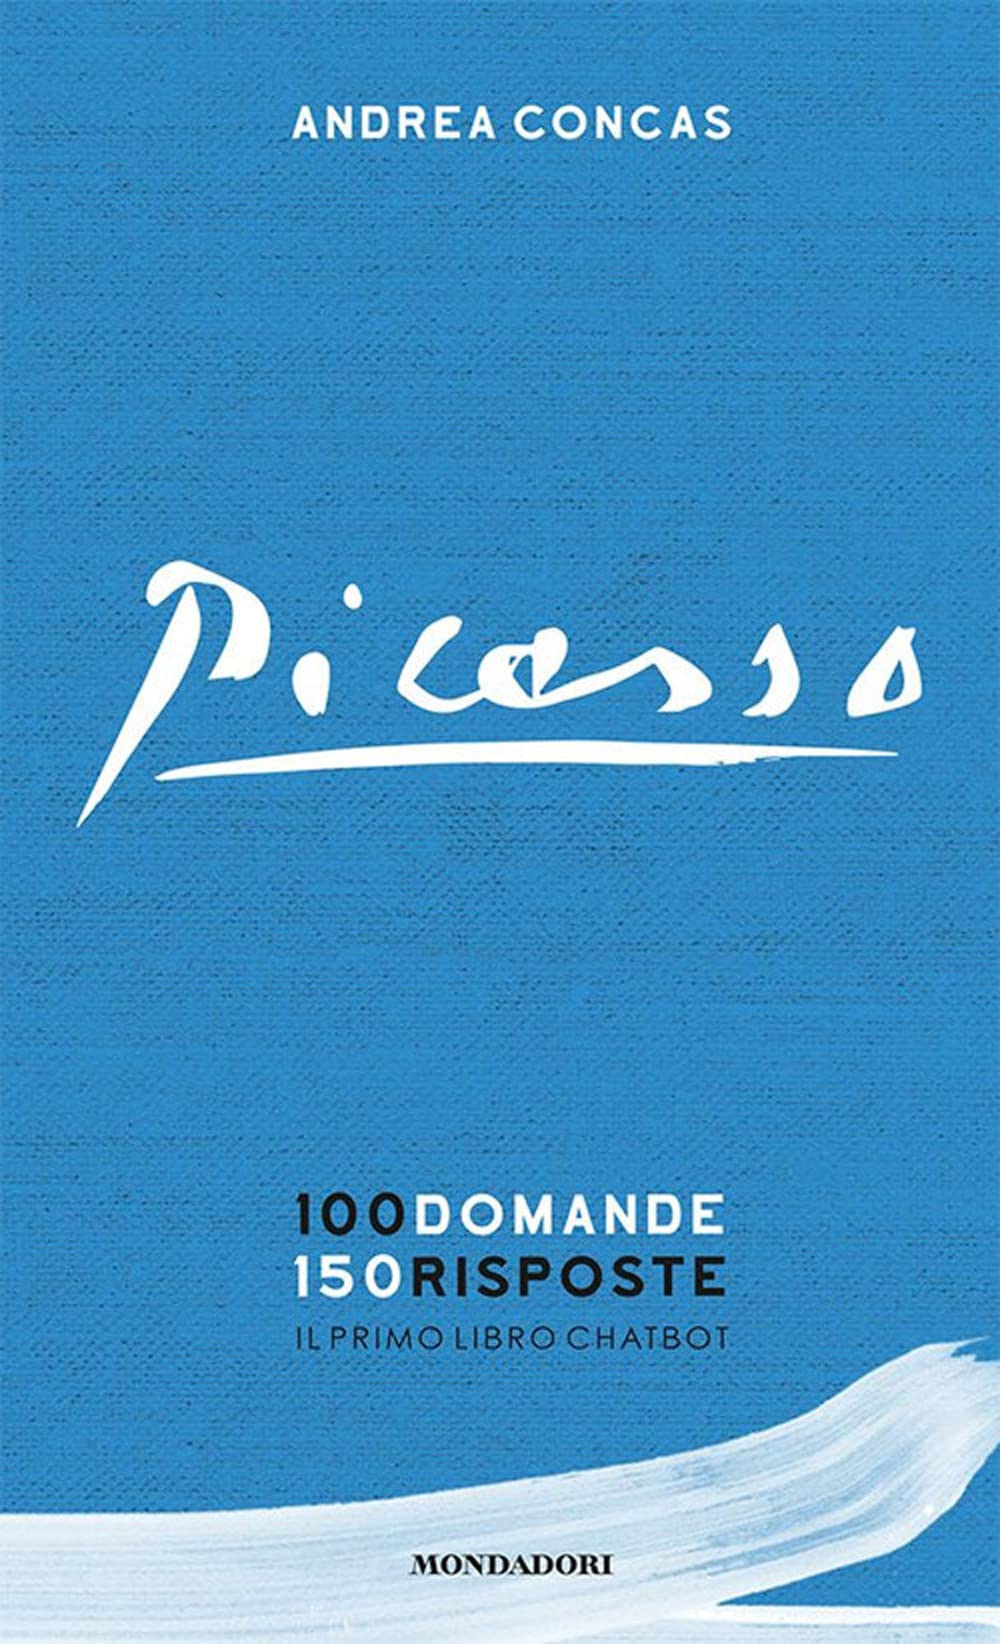 Andrea Concas – Picasso. 100 domande 150 risposte (Mondadori, Milano 2022)